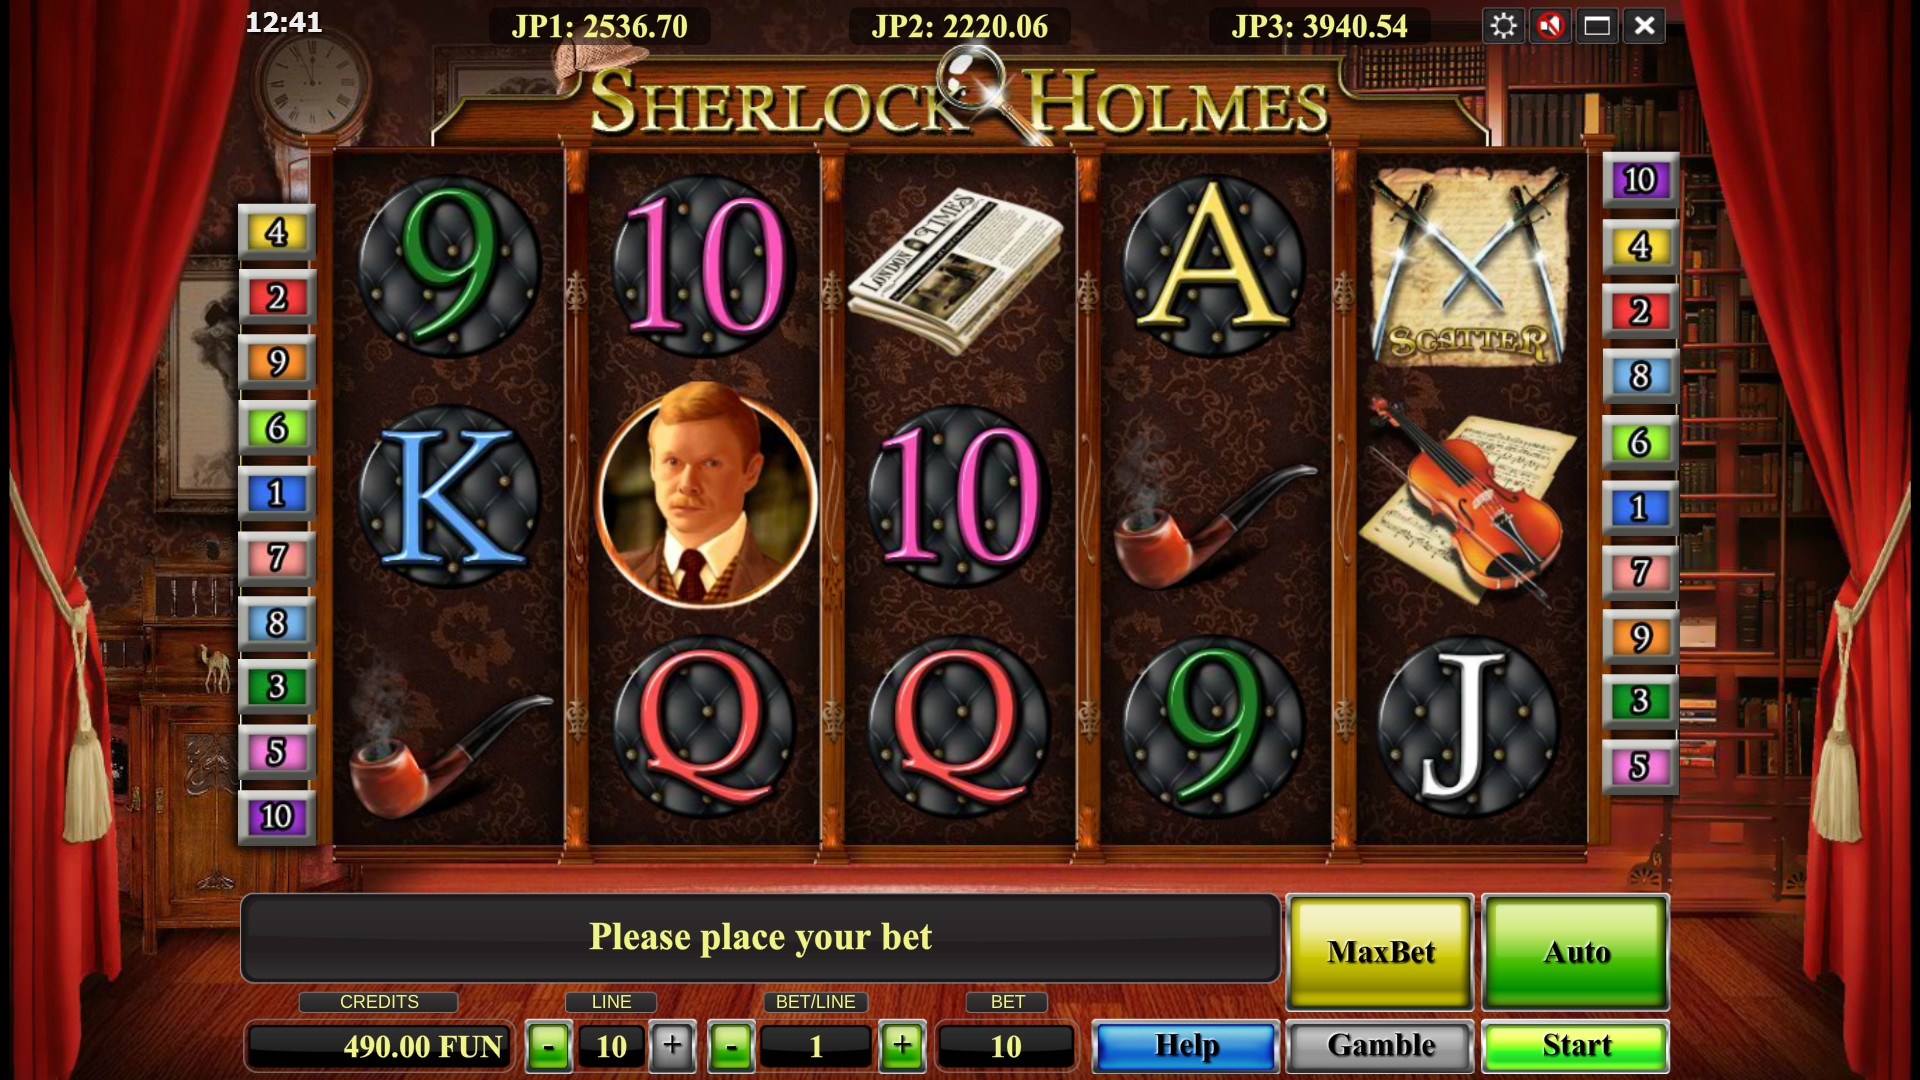 Sherlock Holmes (Sherlock Holmes) from category Slots